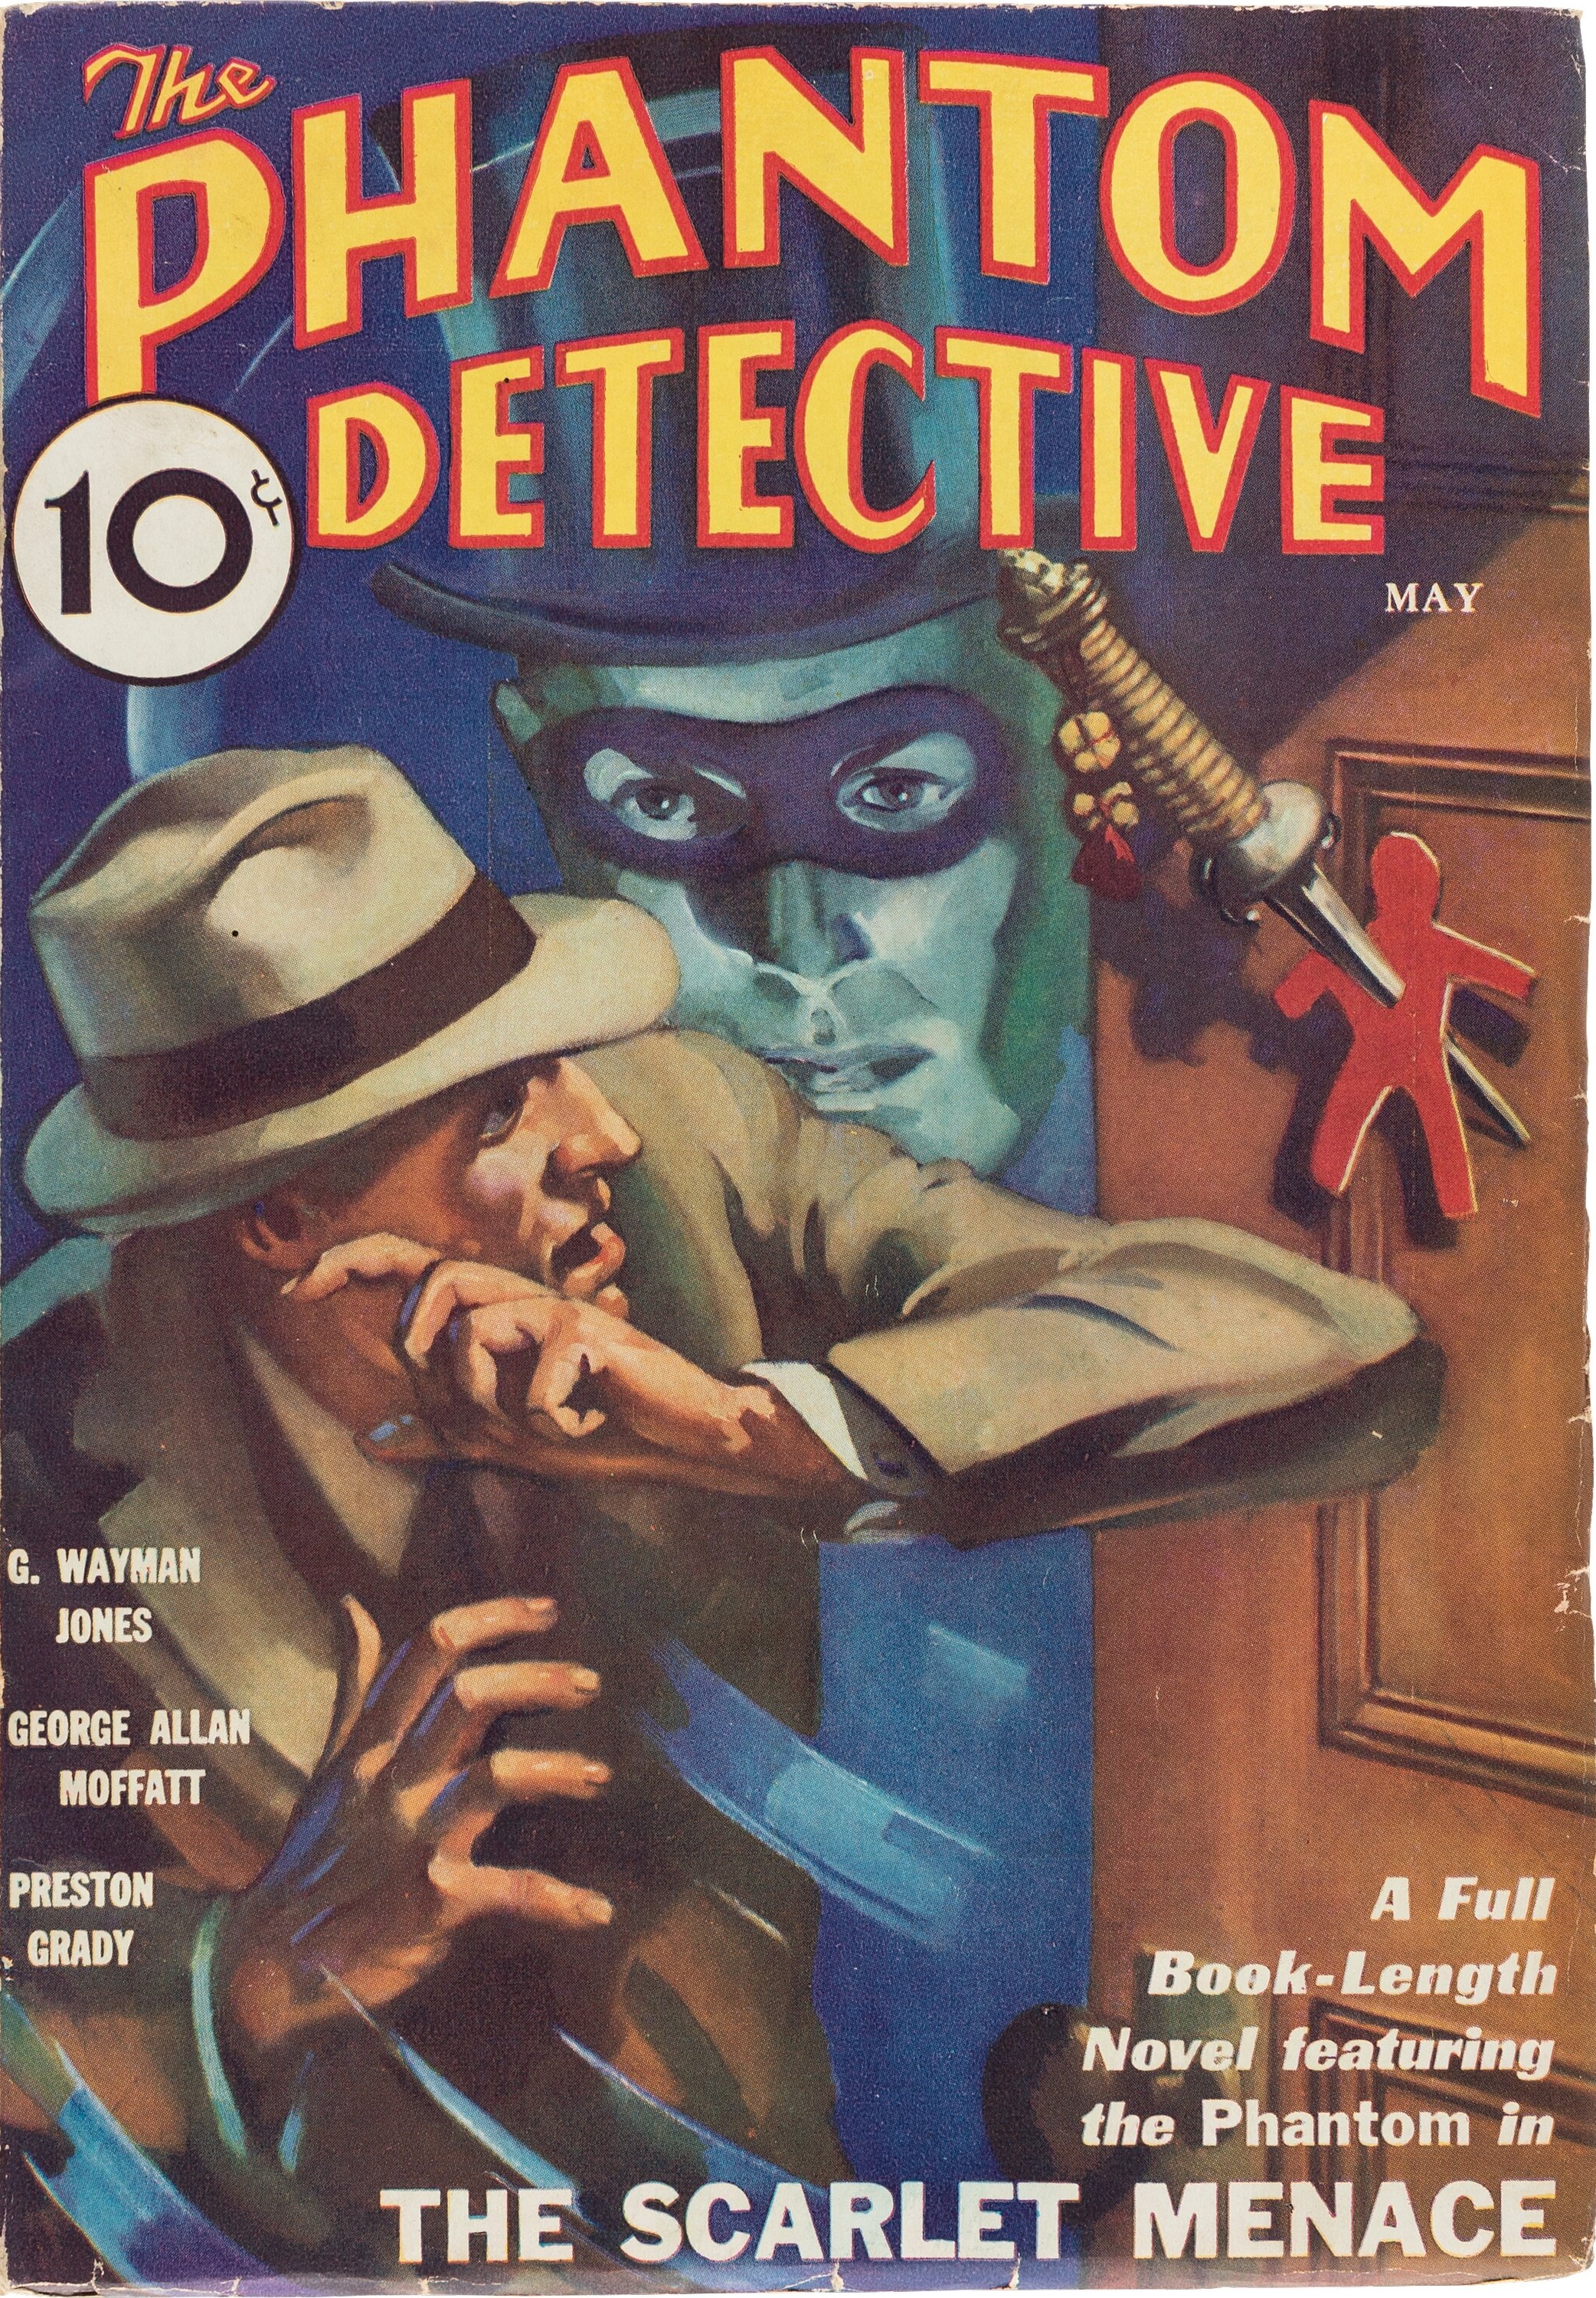 The Phantom Detective - May 1933